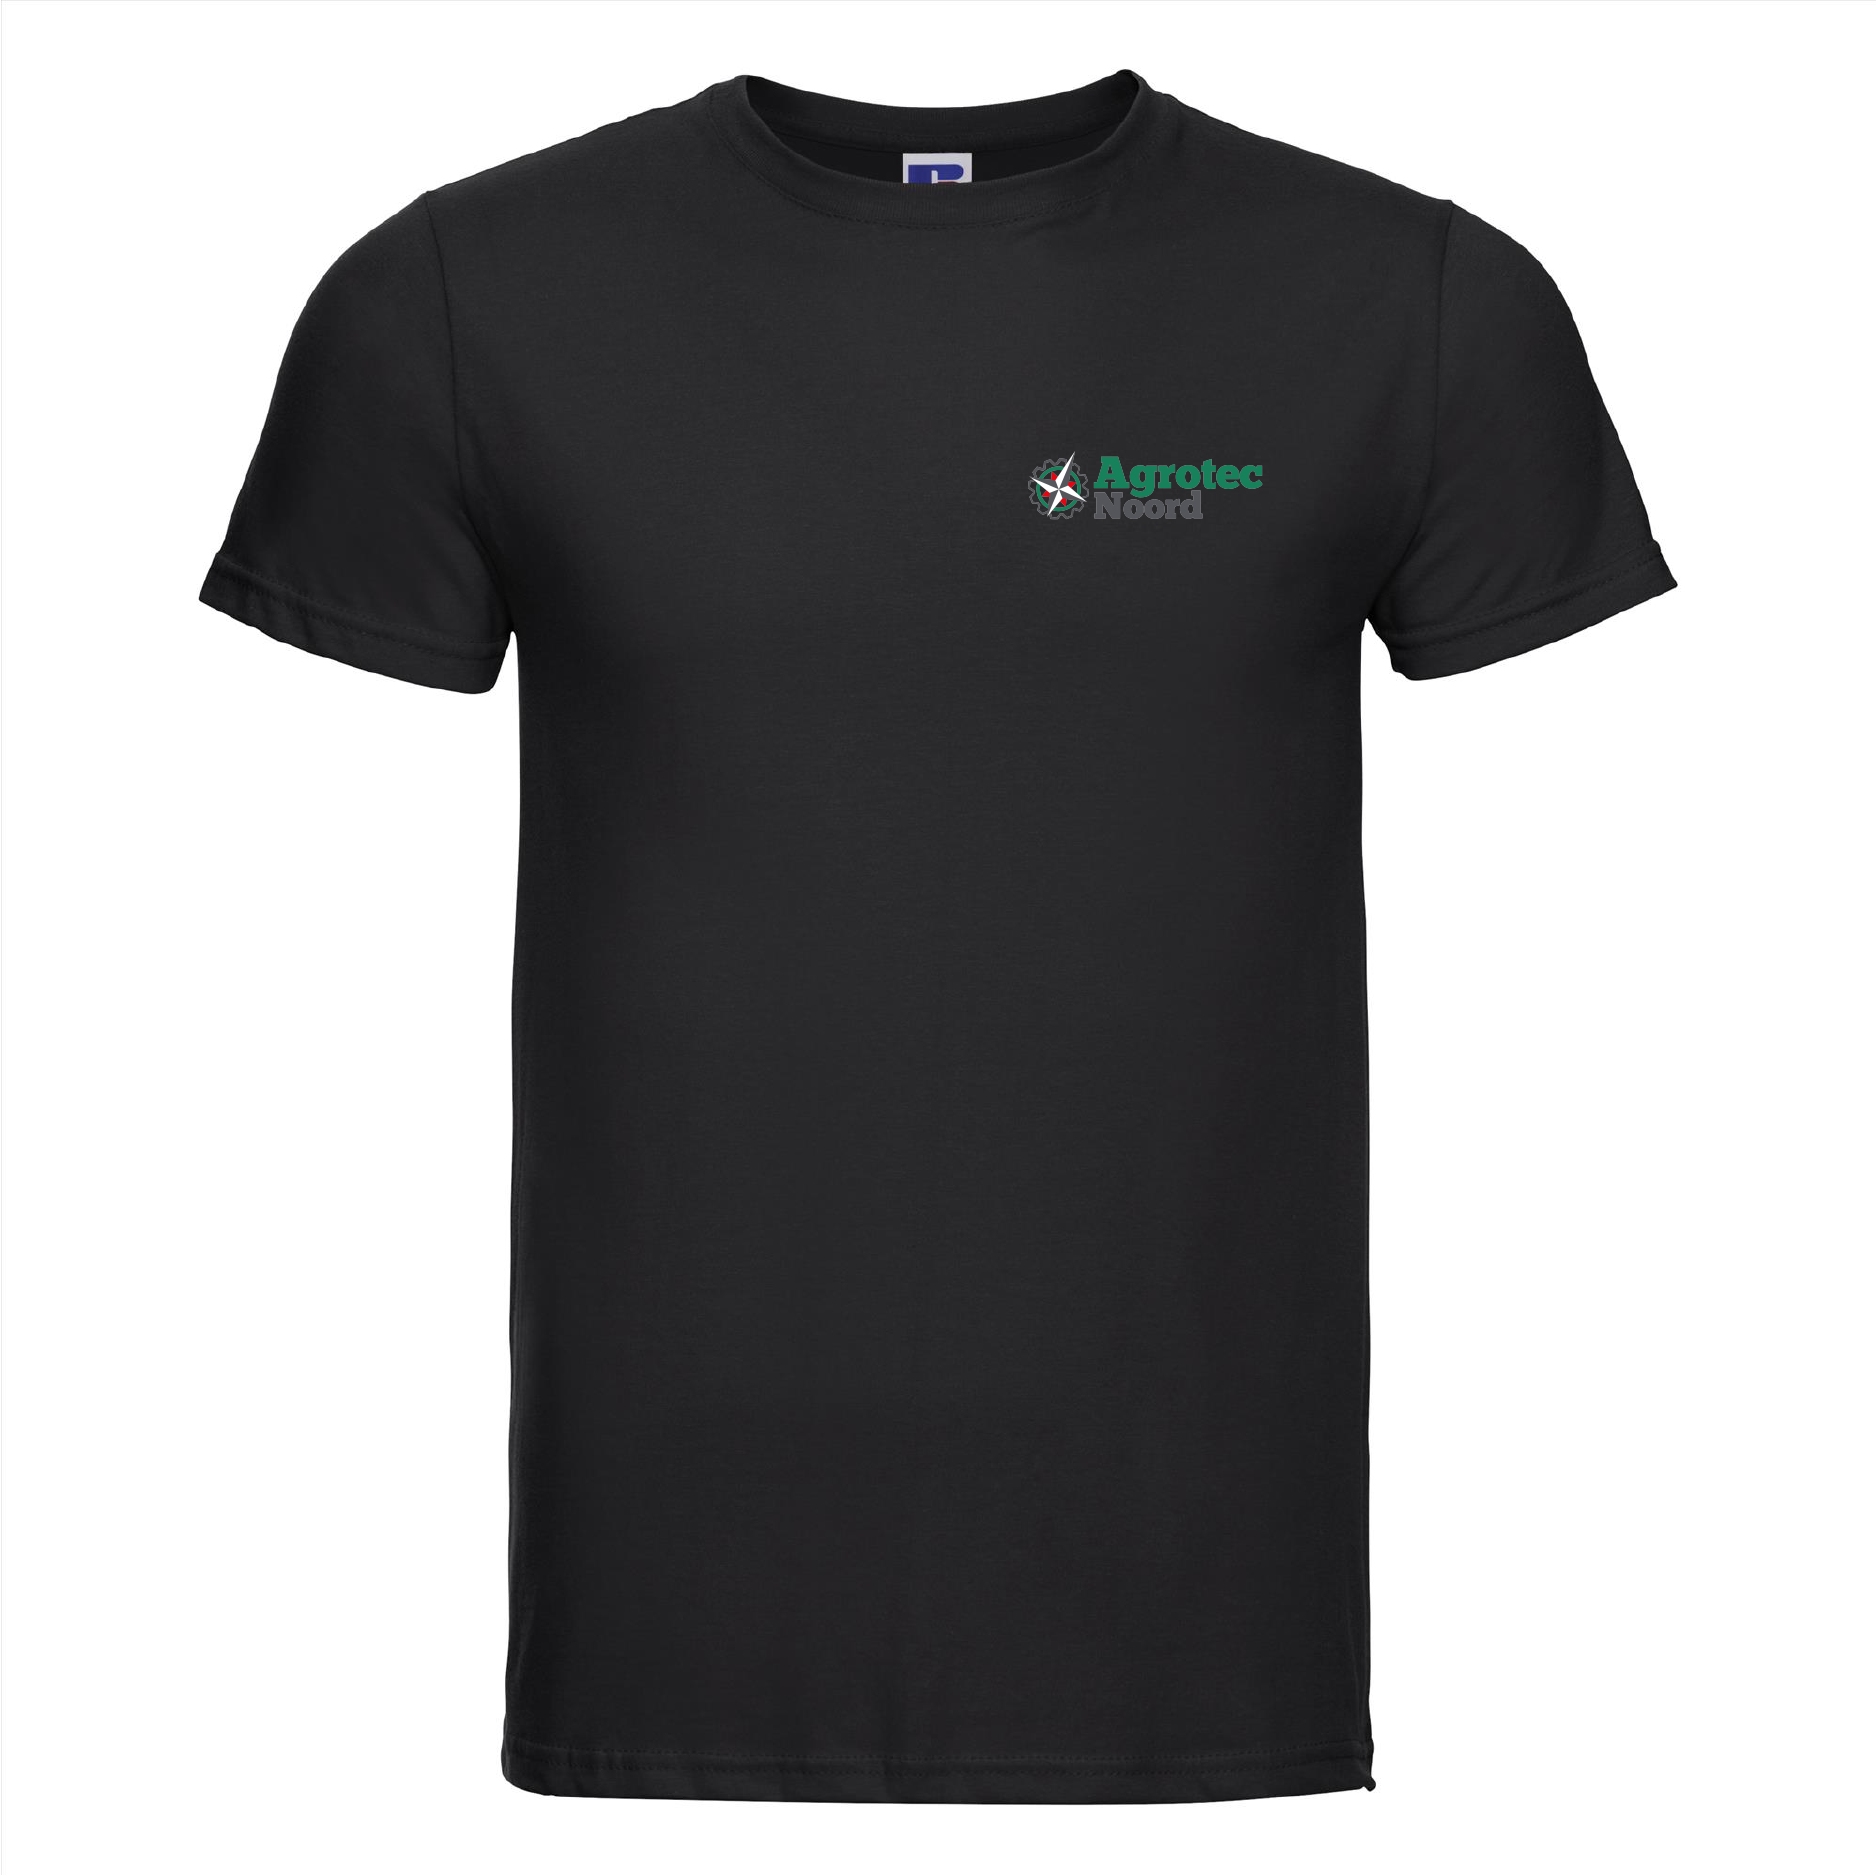 Russell T-Shirt MEN bedrukt met logo